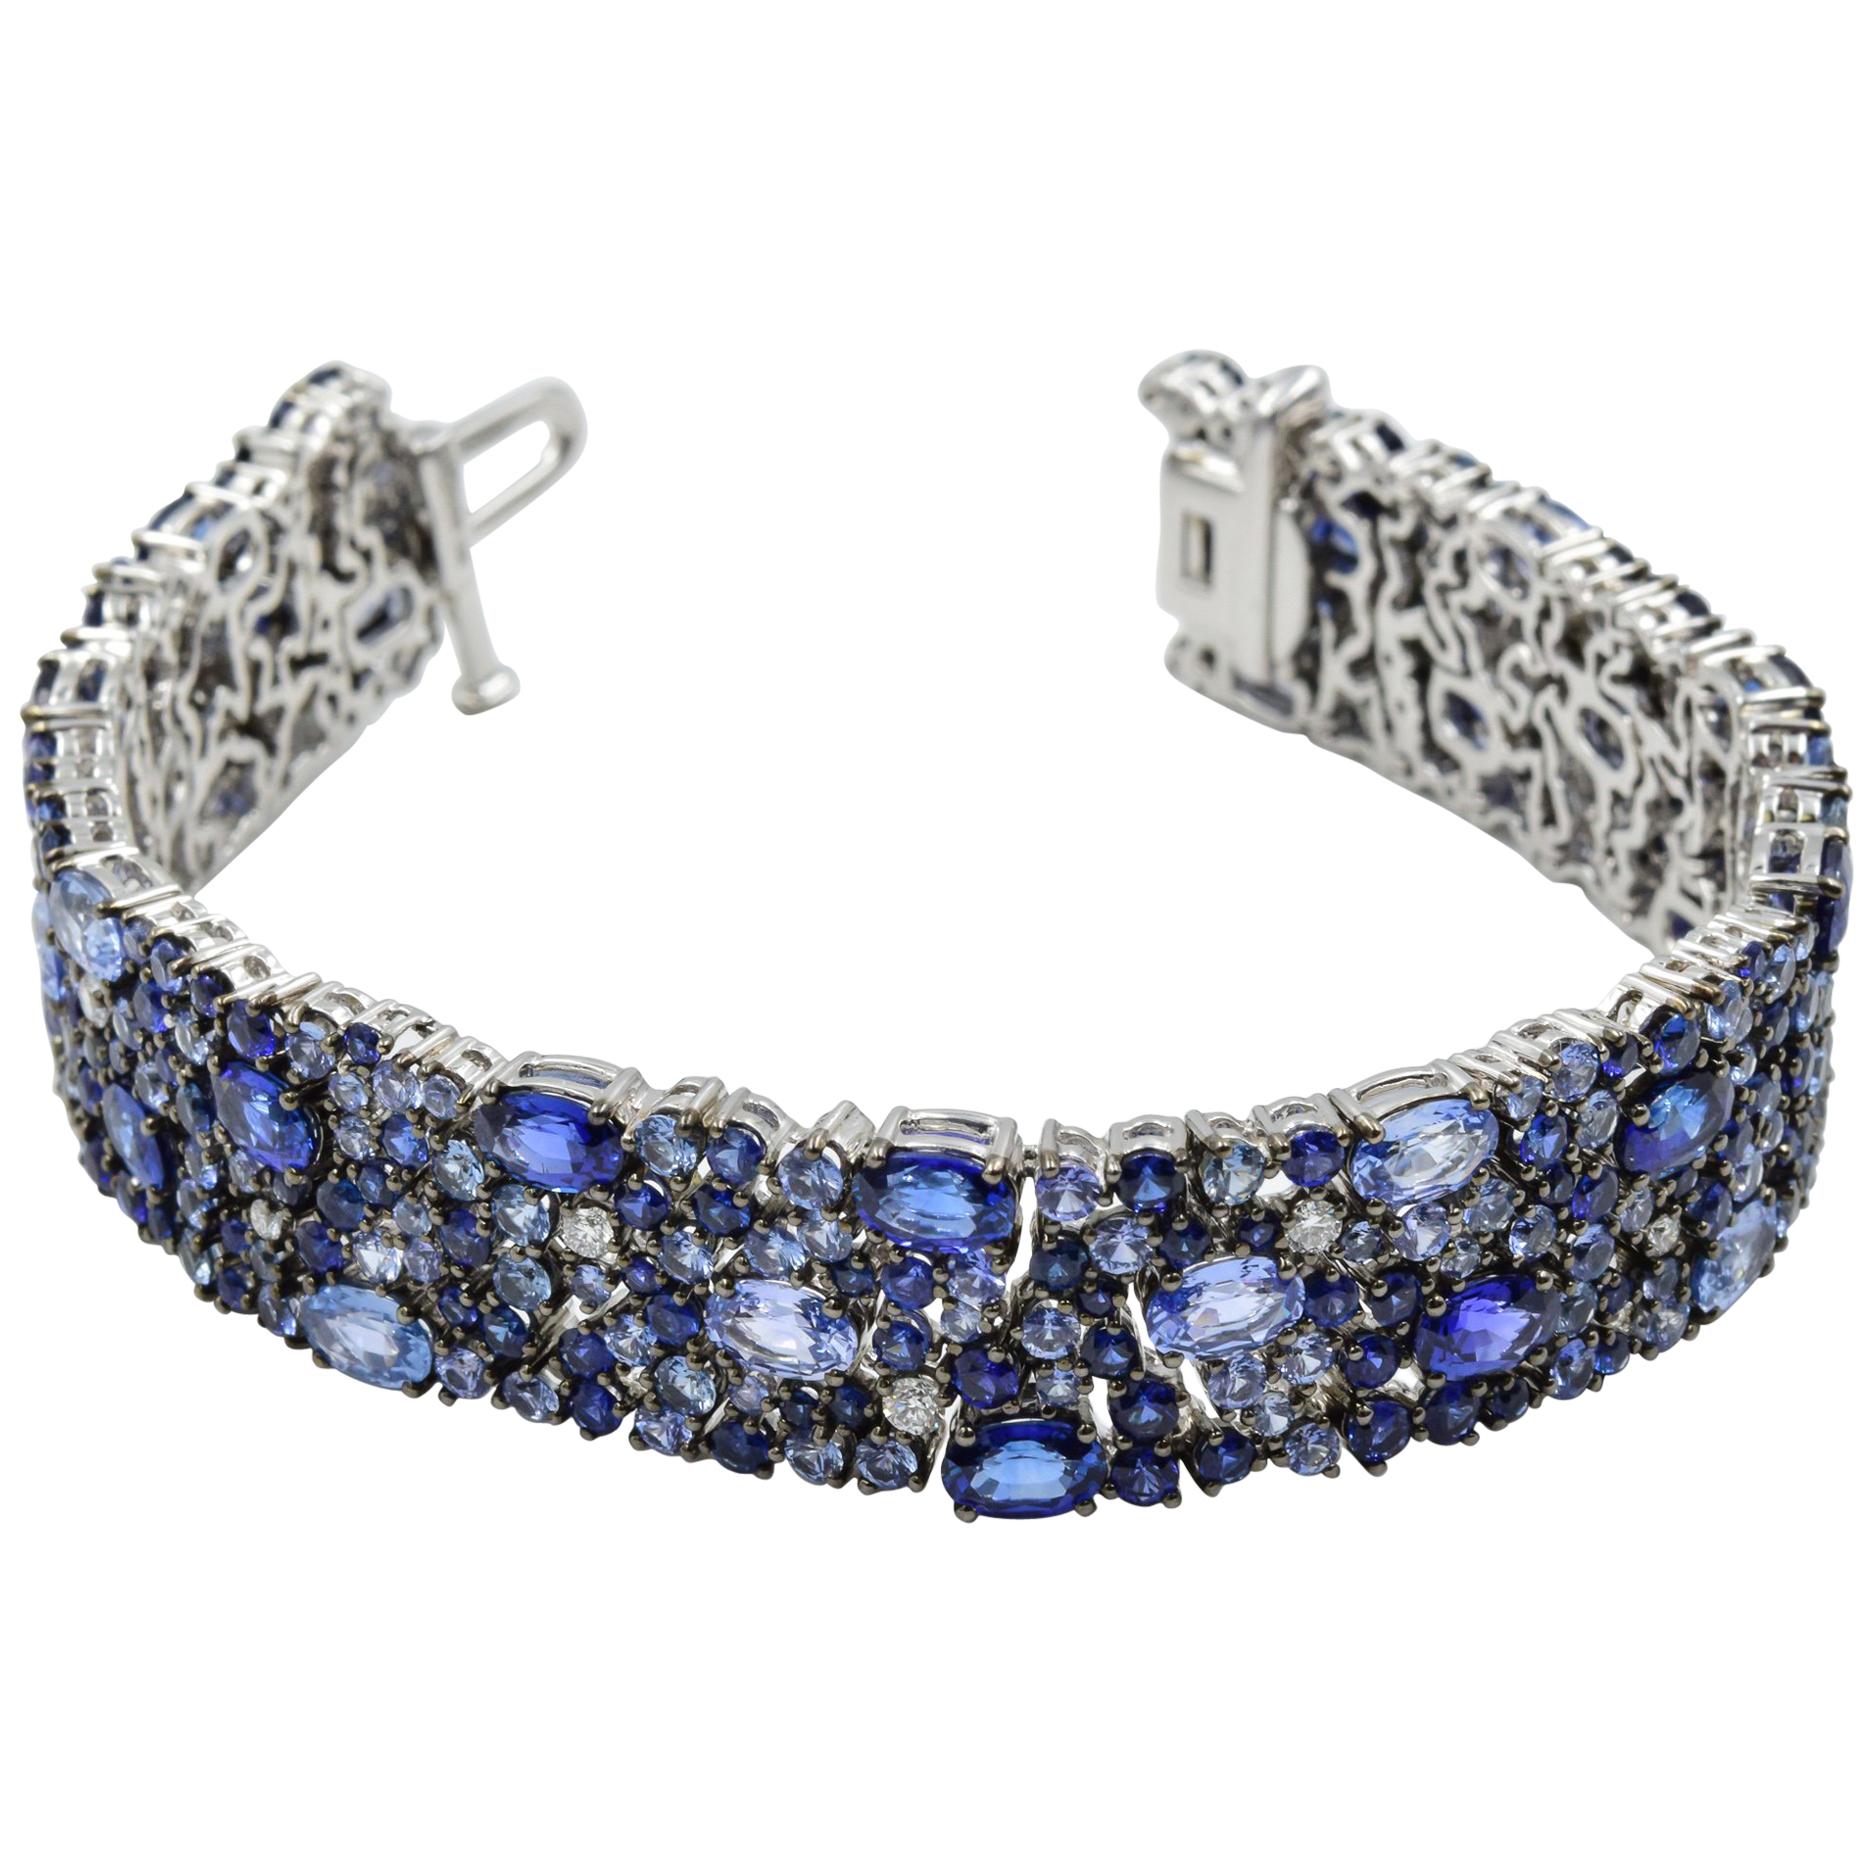 Robert Procop American Glamour Bracelet - Dark and Light Blue Sapphire in 18k